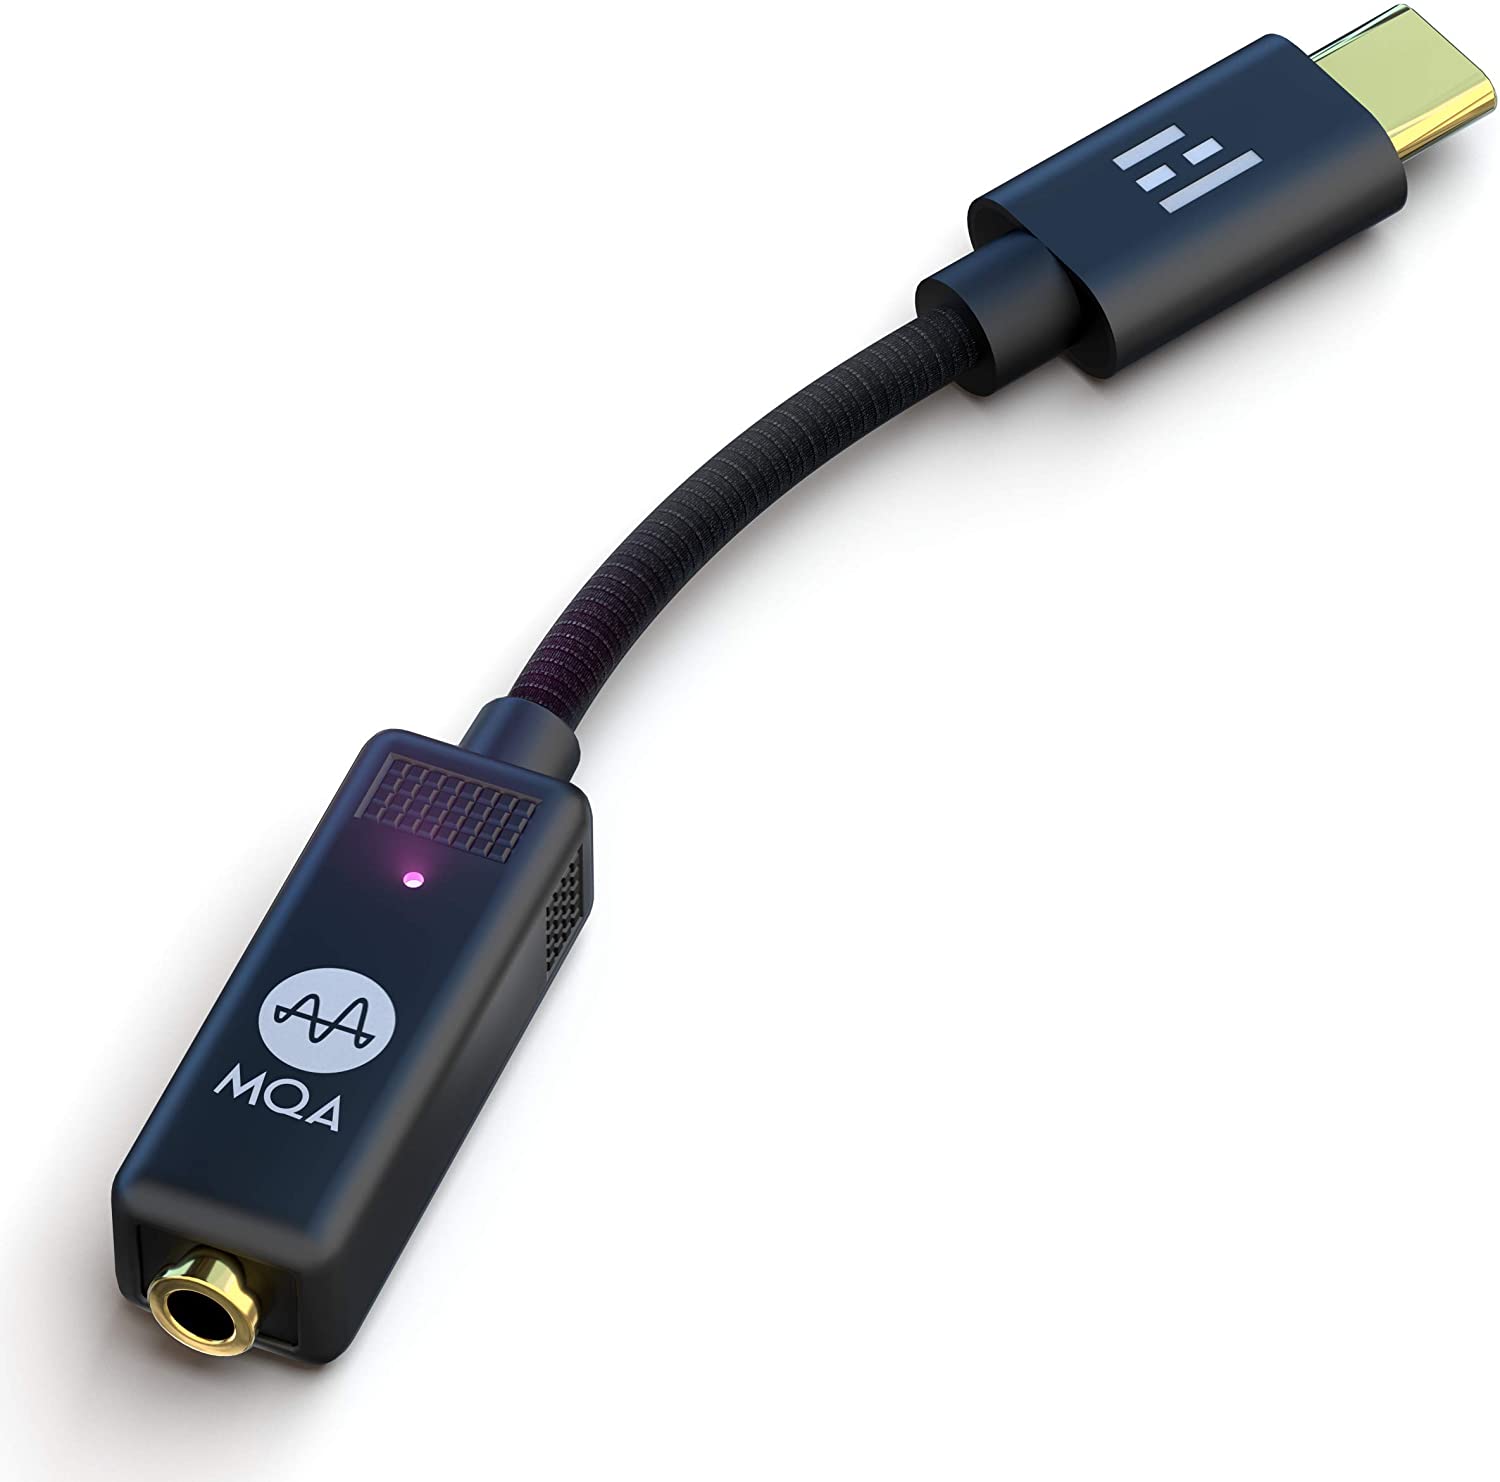 Hiby FC3 Portable MQA USB DAC Headphone Amplifier — HiFiGo